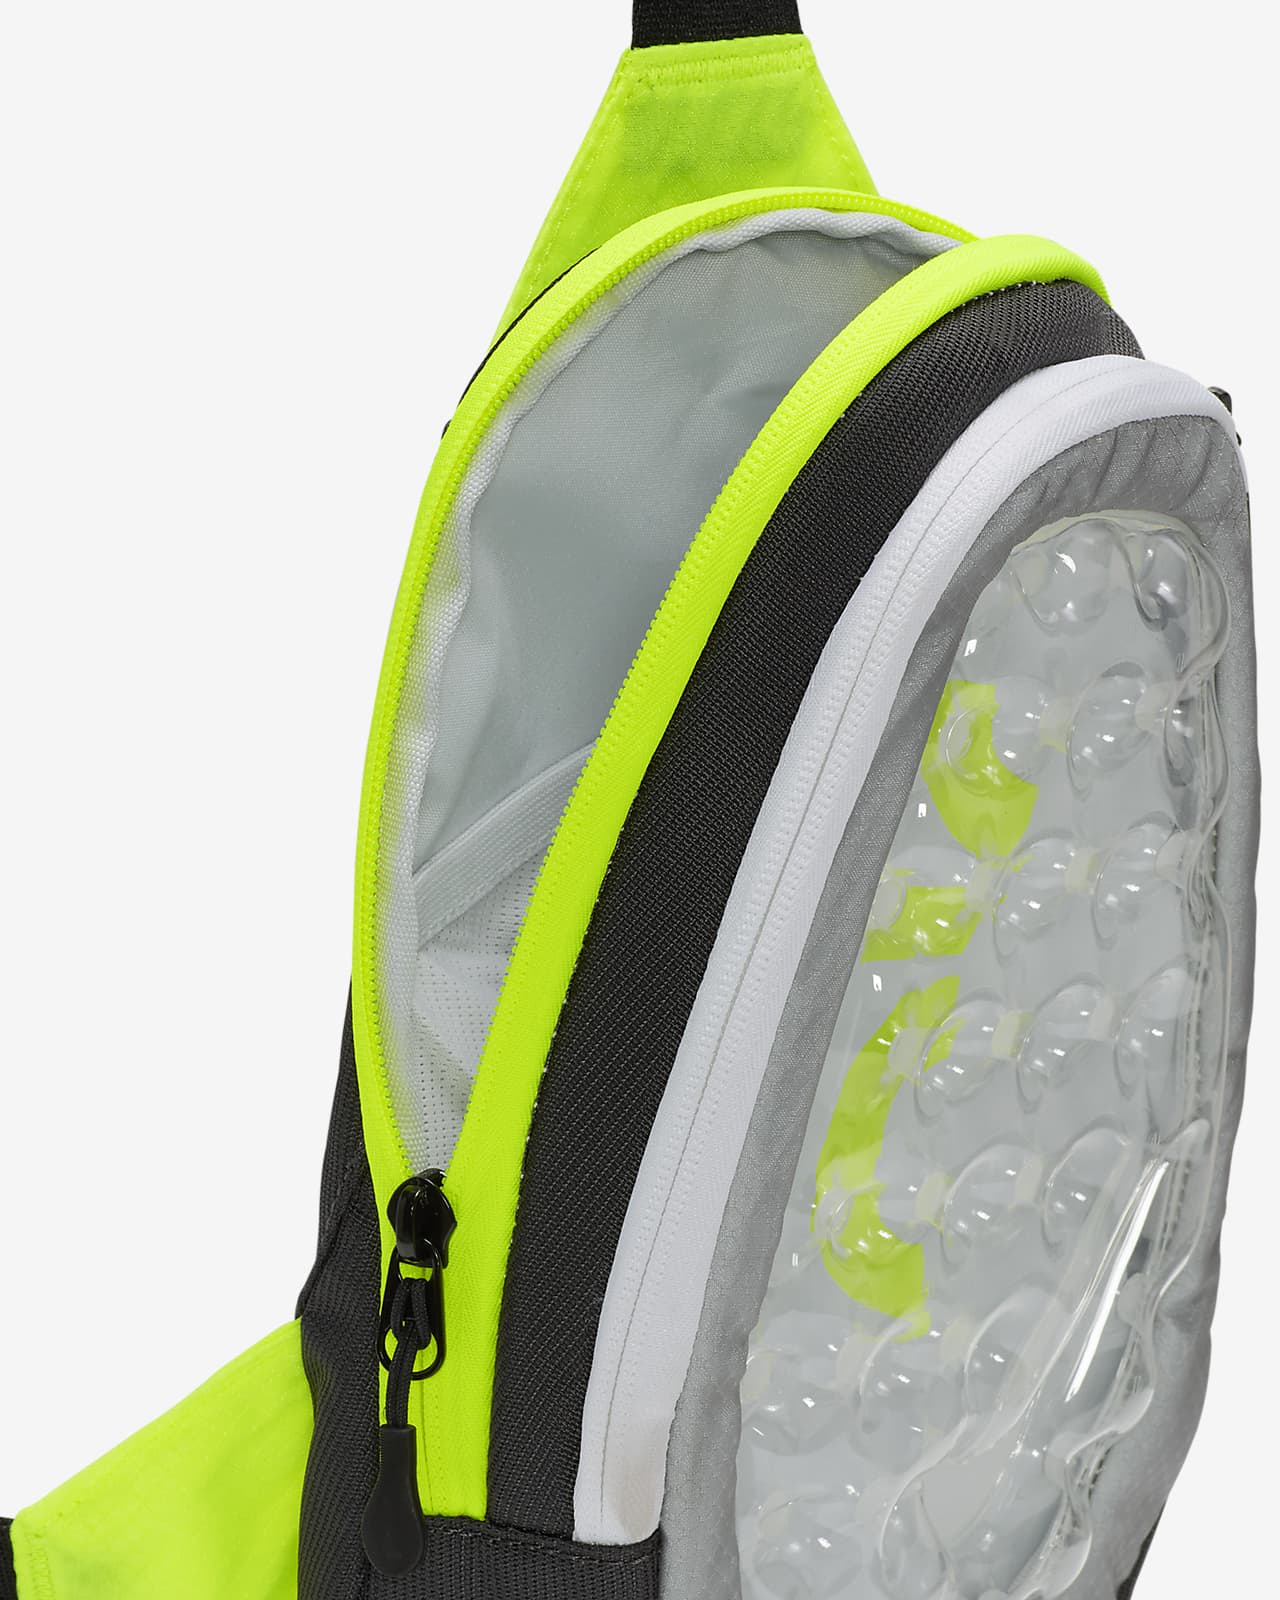 Nike Air Max Essential Crossbody Bag